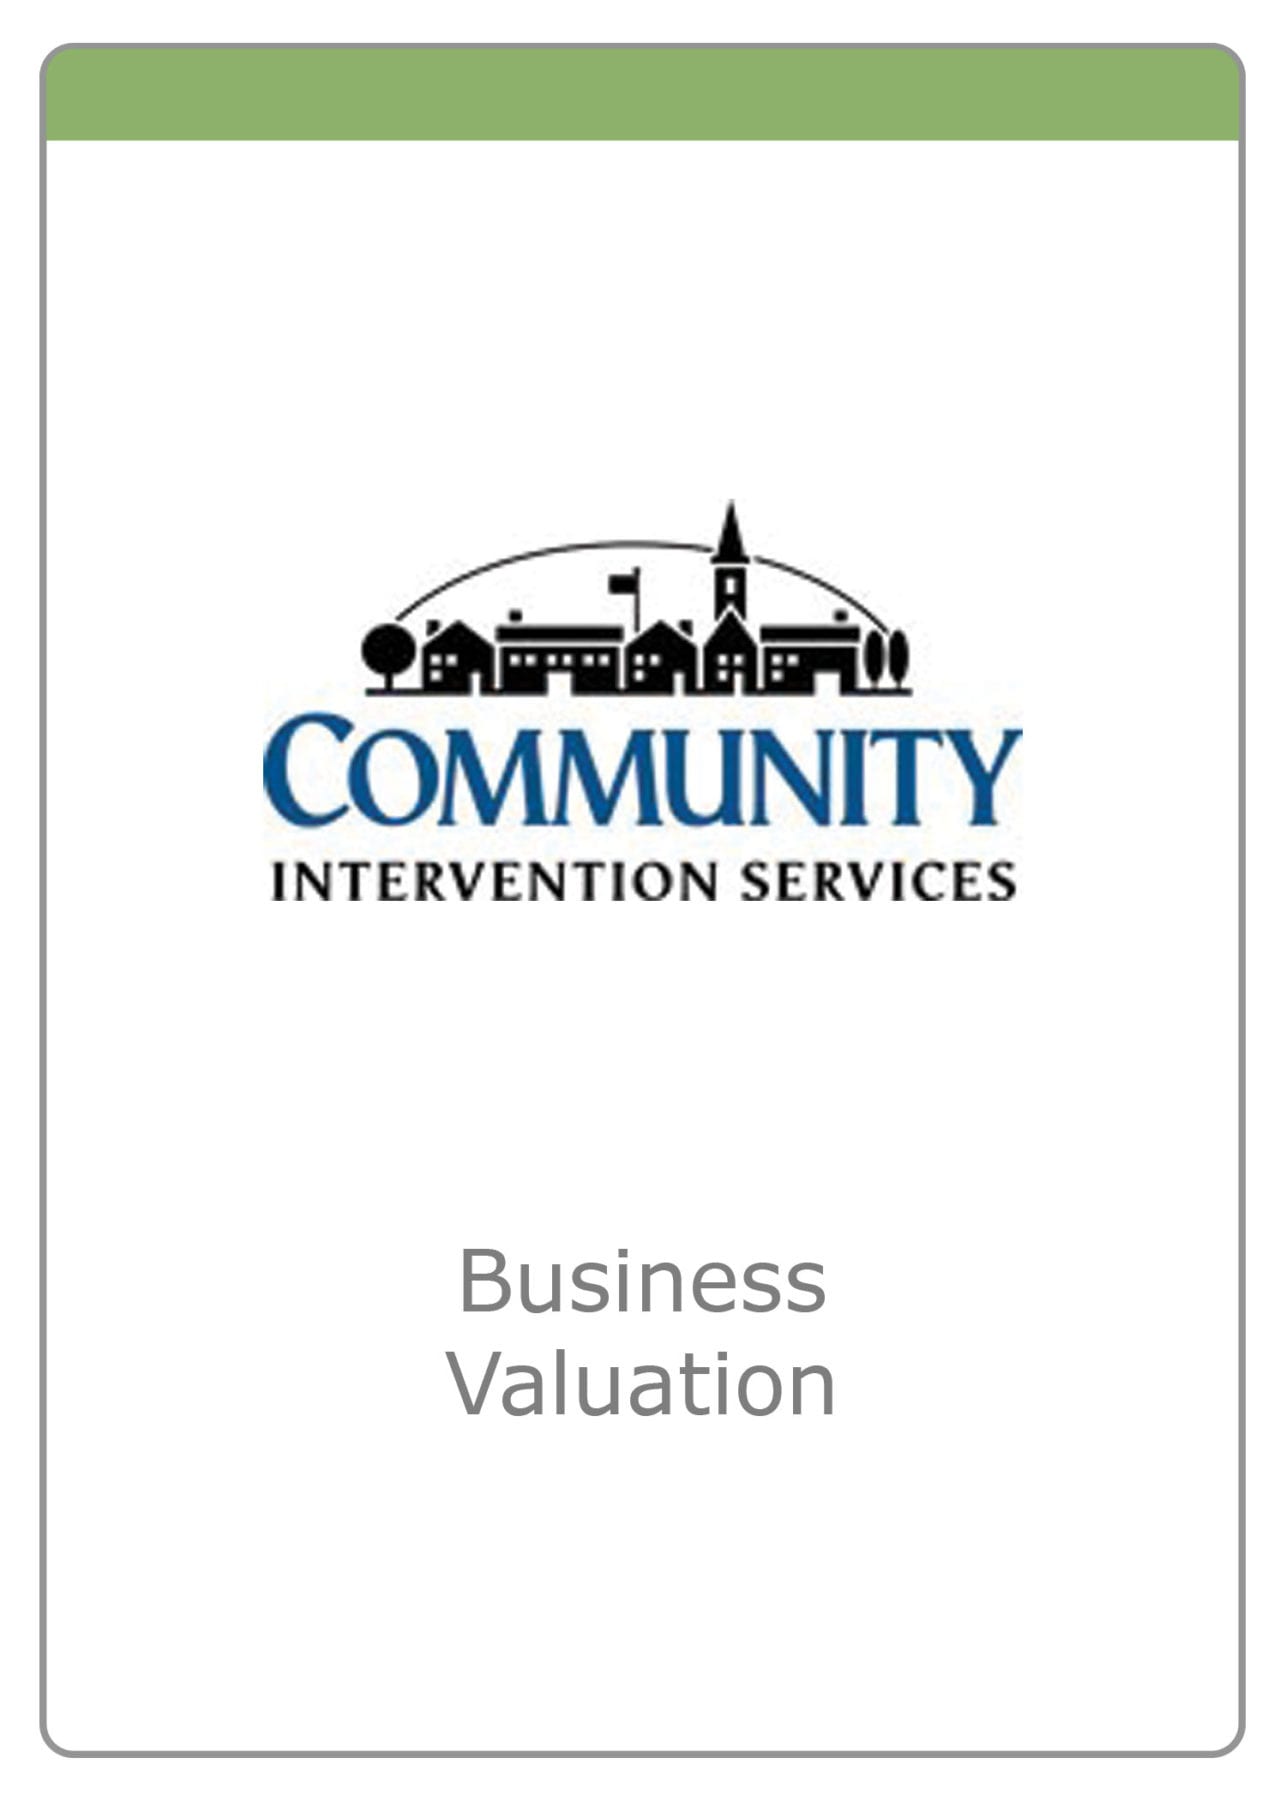 Community Intervention Services - Portfolio Valuation - The McLean Group